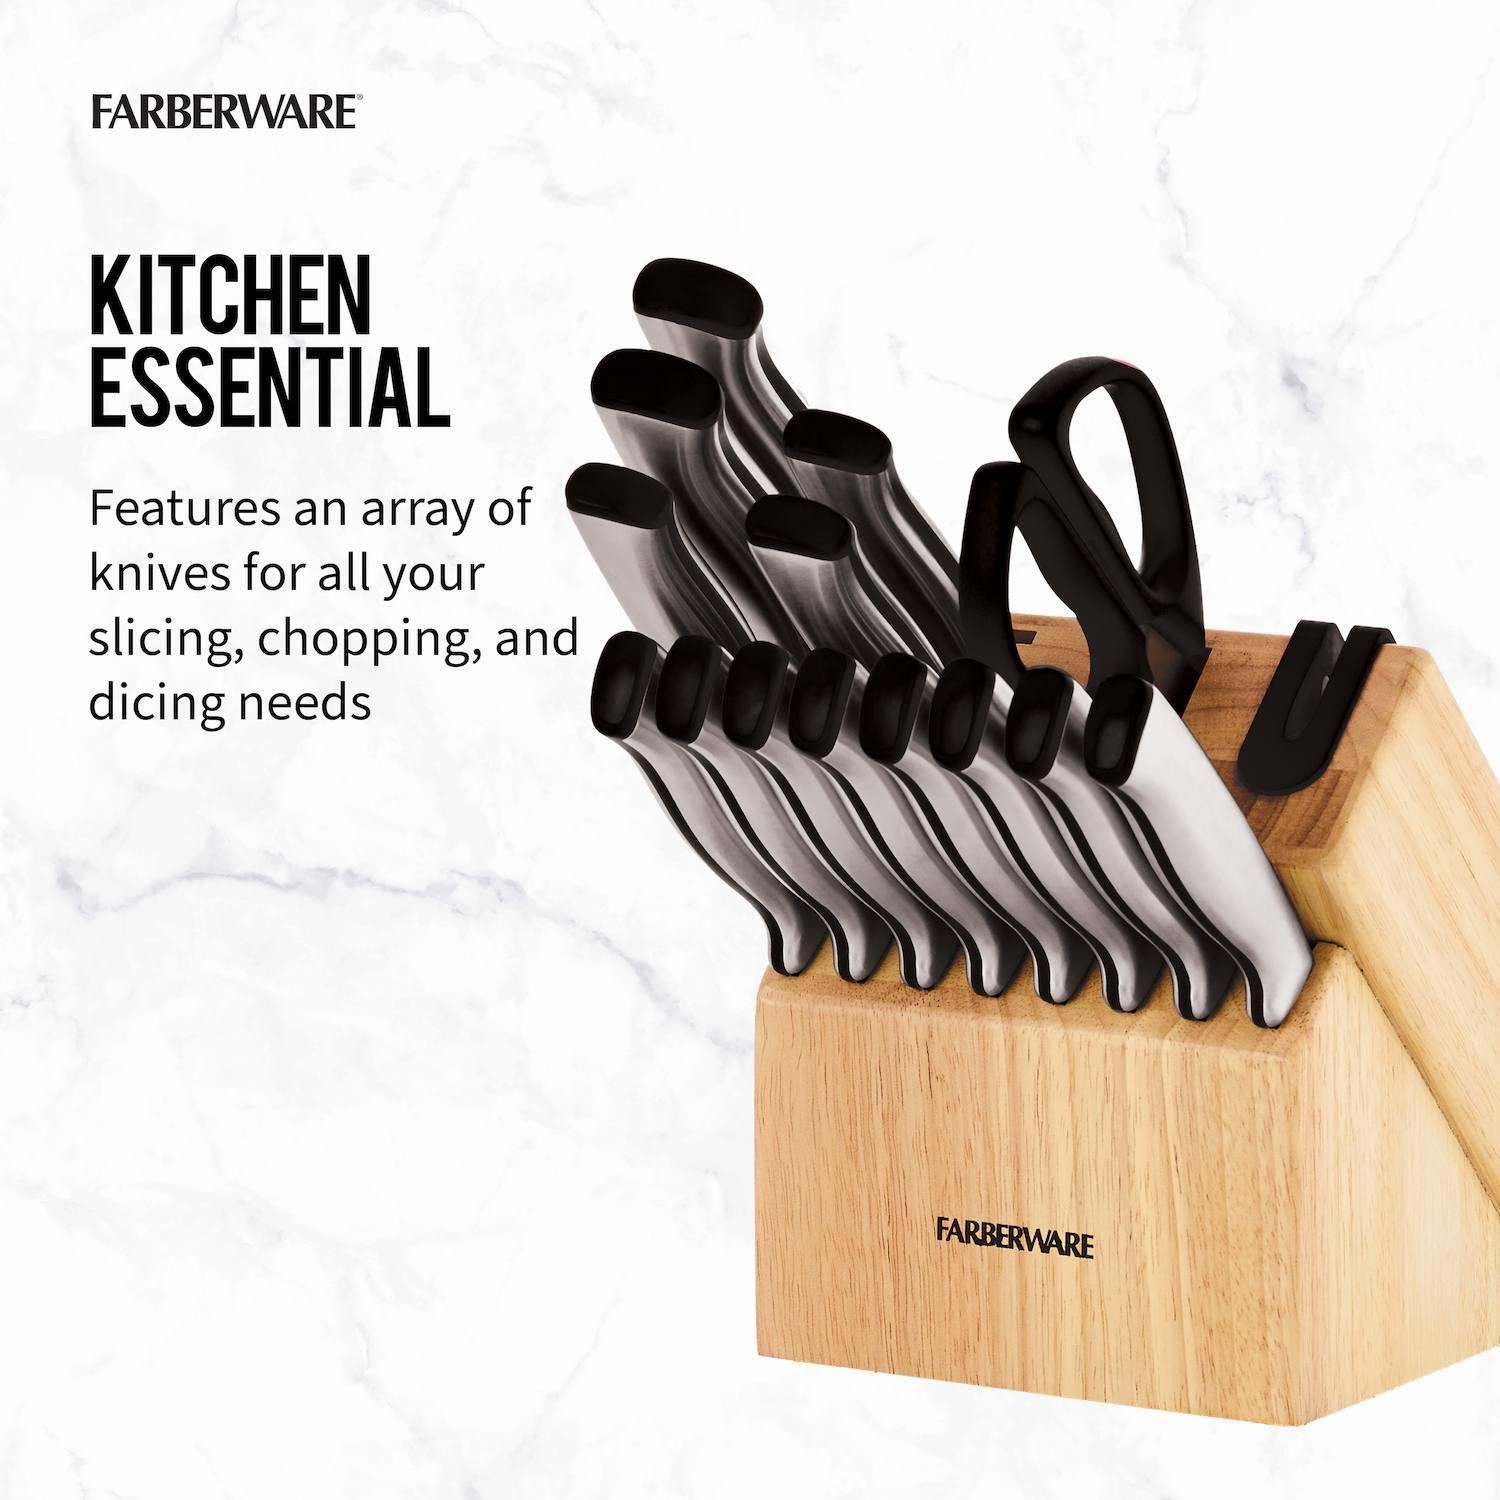 $80  Farberware Edgekeeper 15-pc. Knife Block Set